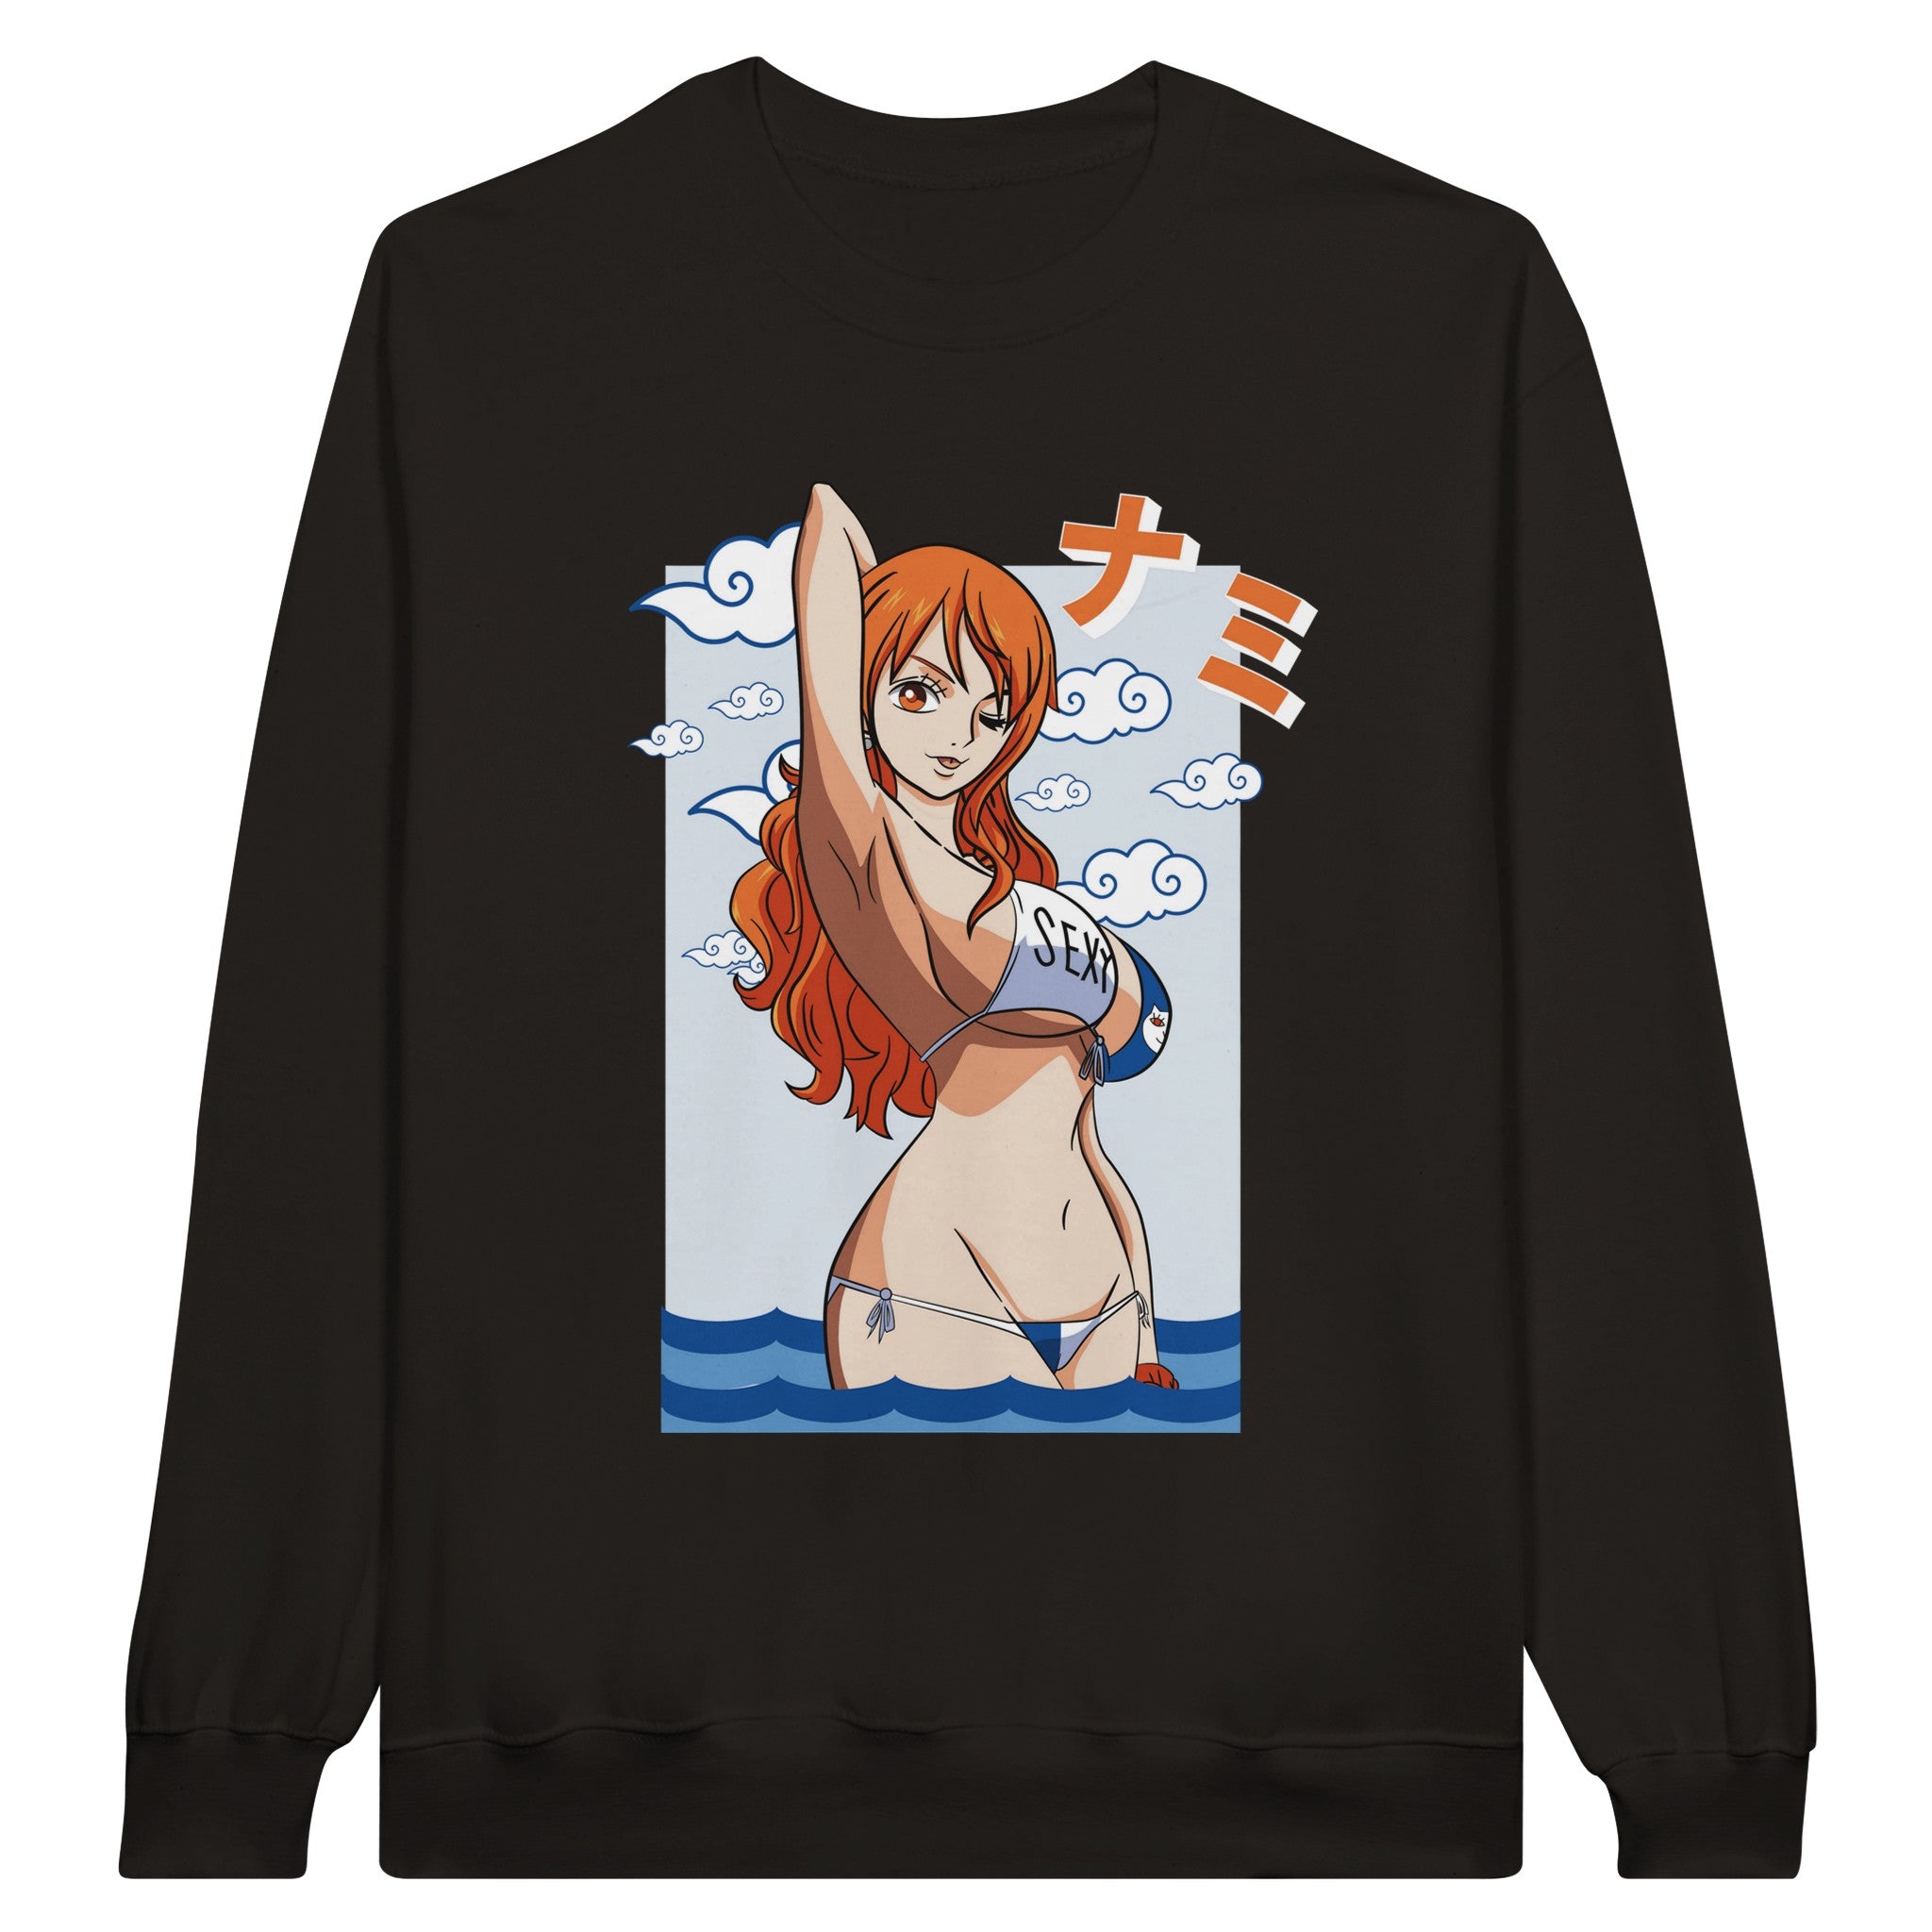 shop and buy one piece anime clothing nami sweatshirt/jumper/longsleeve